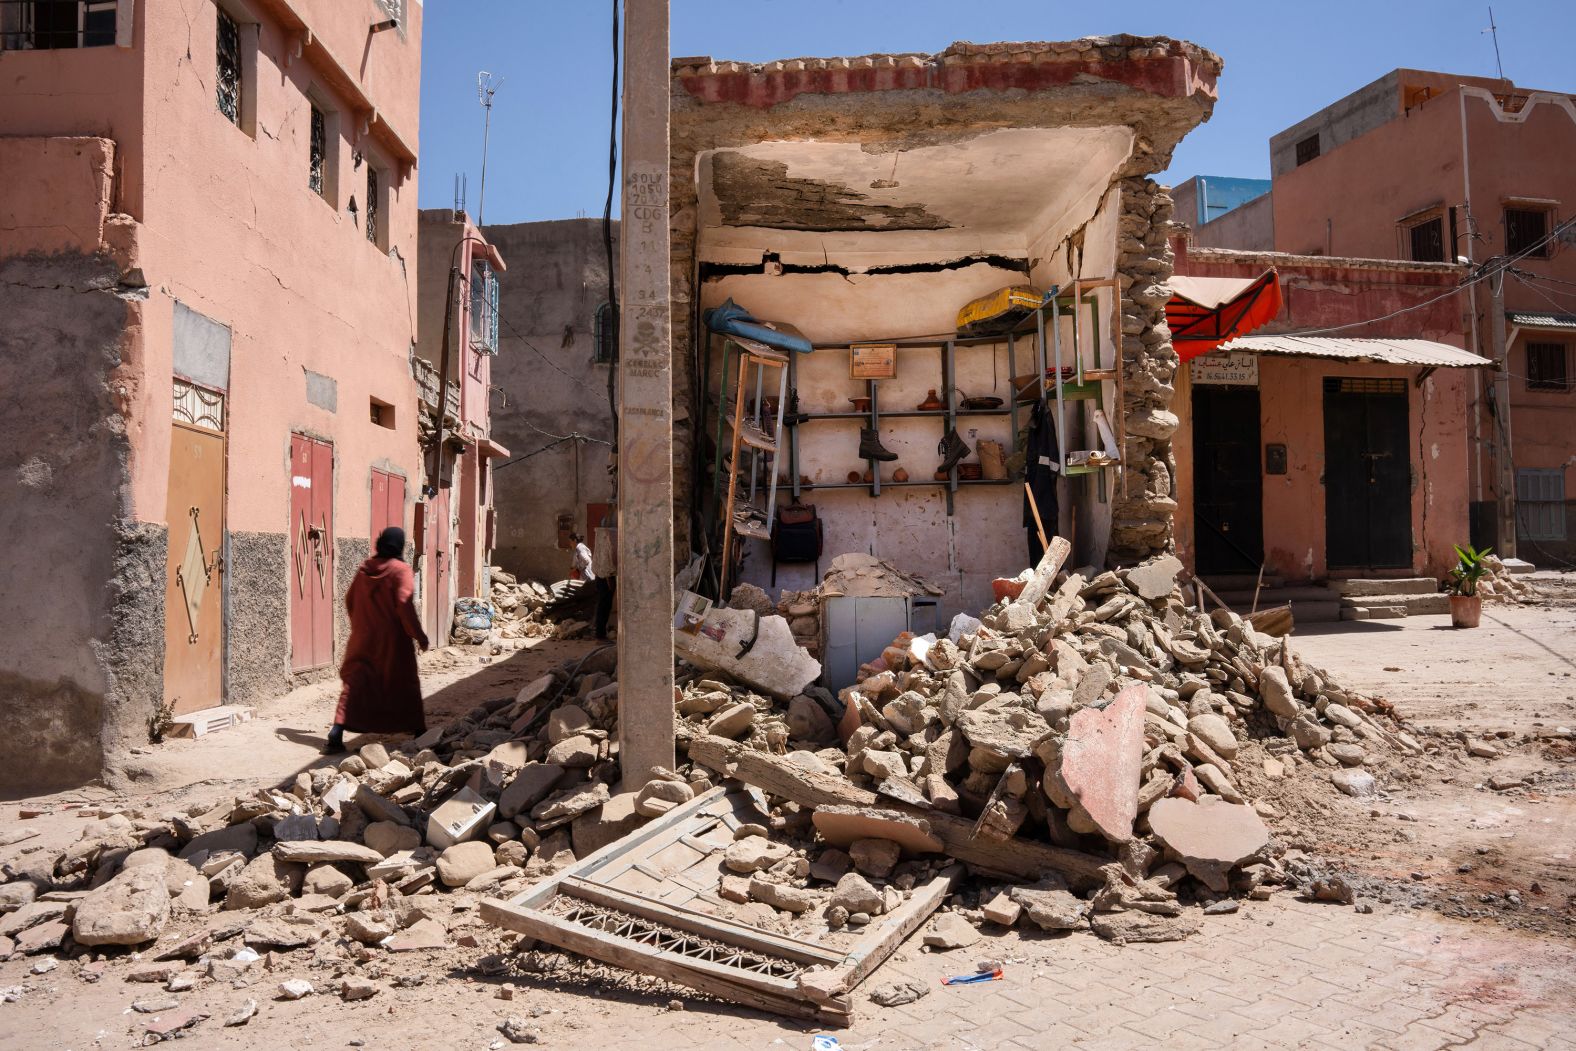 A woman walks next to a destroyed shop in Amizmiz.